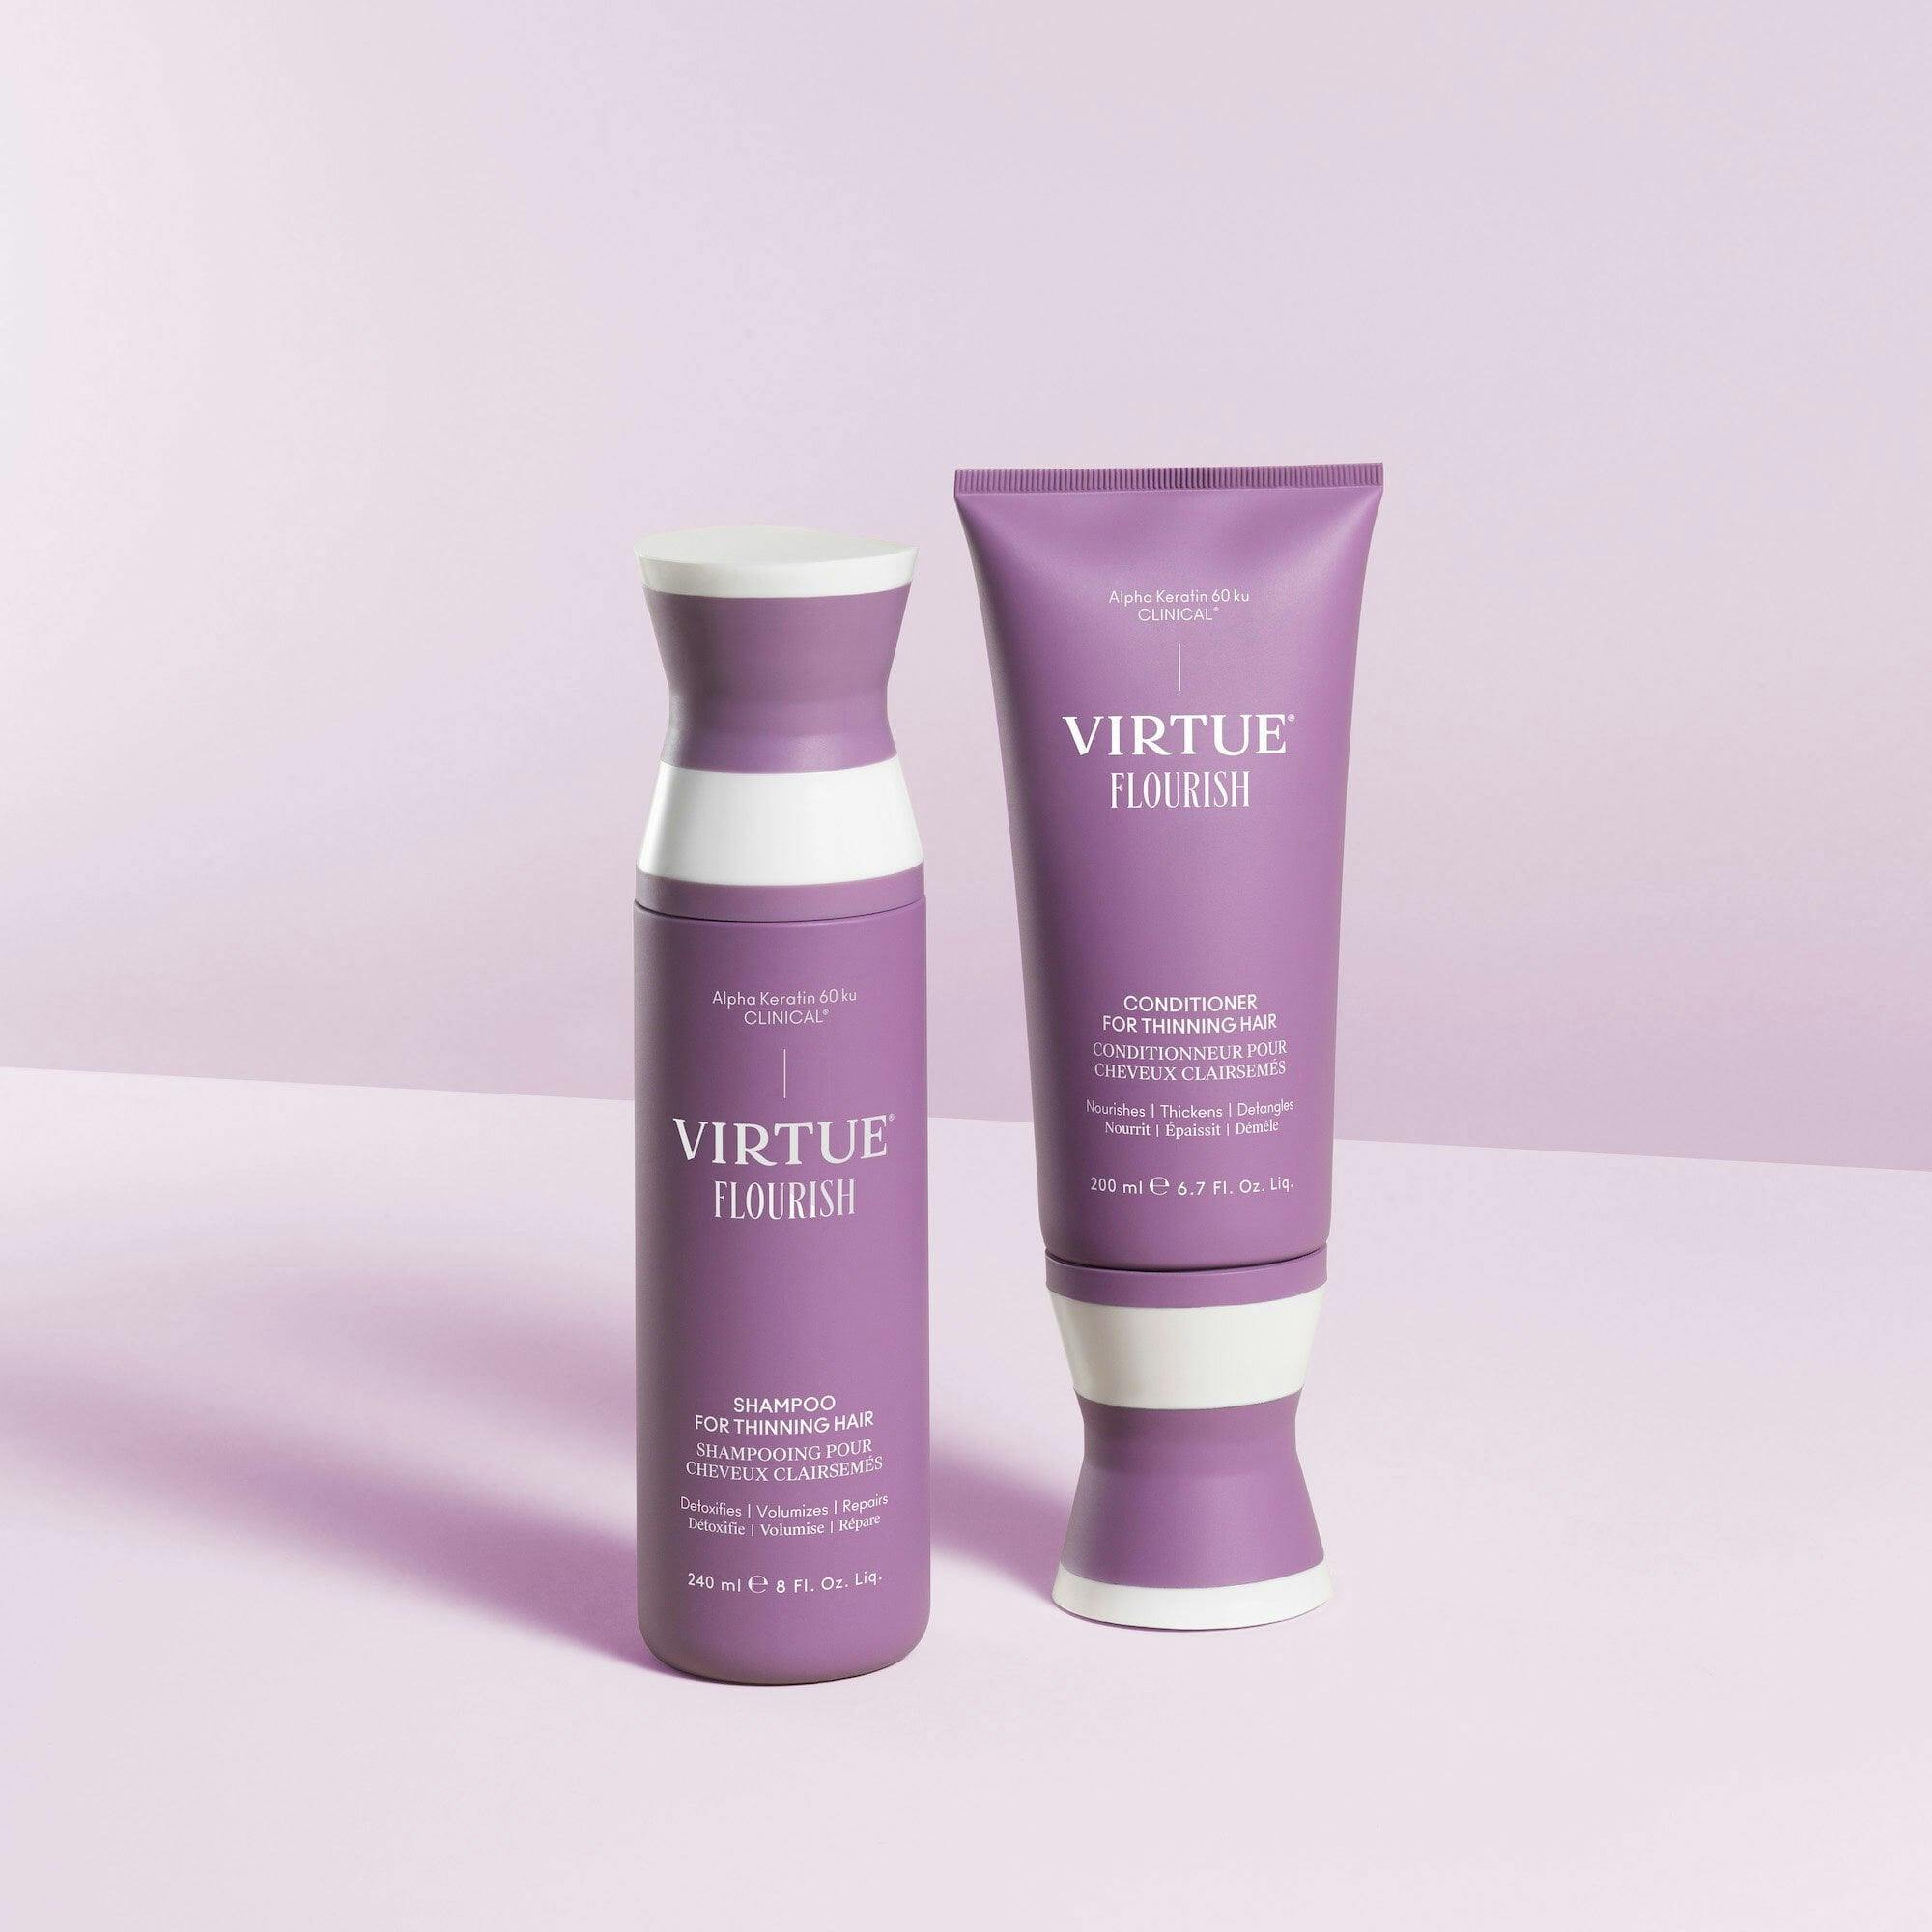 Virtue Flourish Shampoo For Thinning Hair 240ml